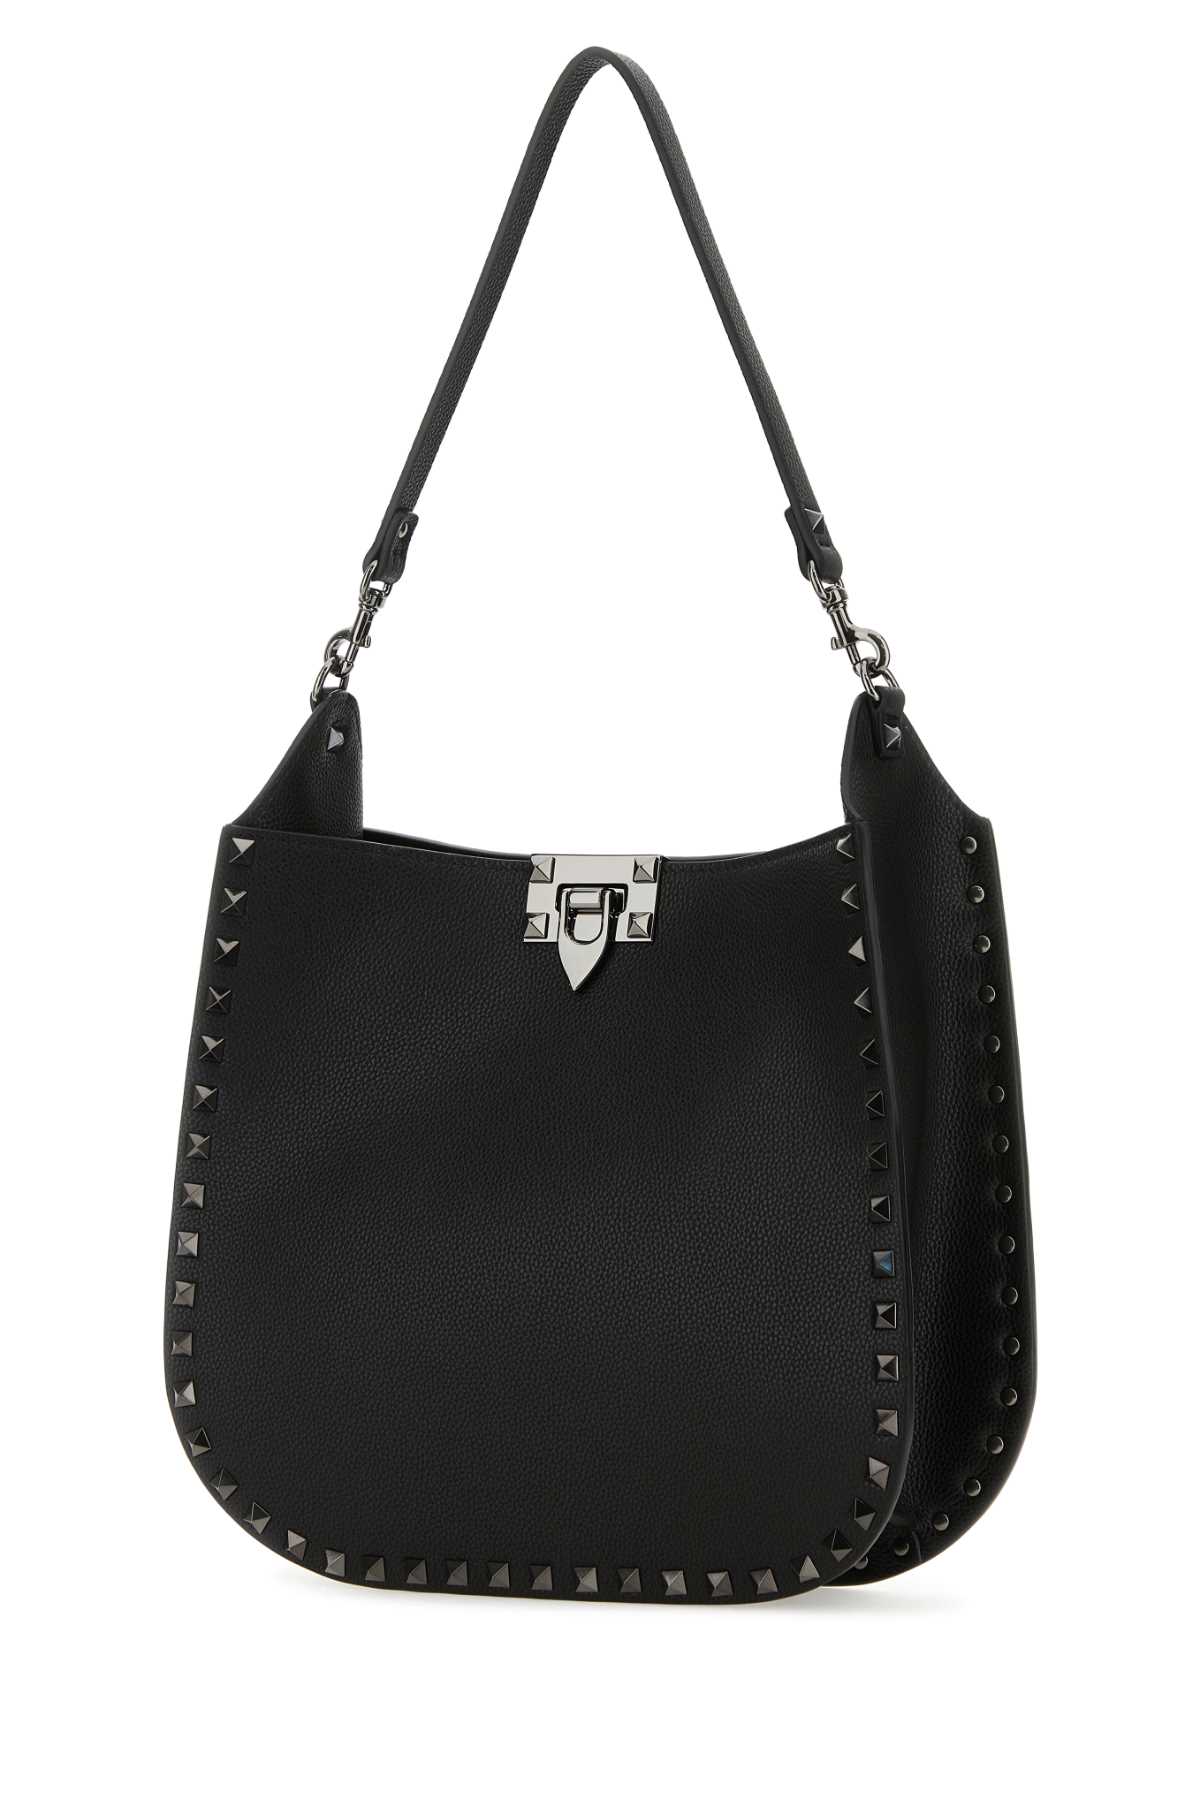 Valentino Garavani Black Leather Hobo Rockstud Handbag In Nero